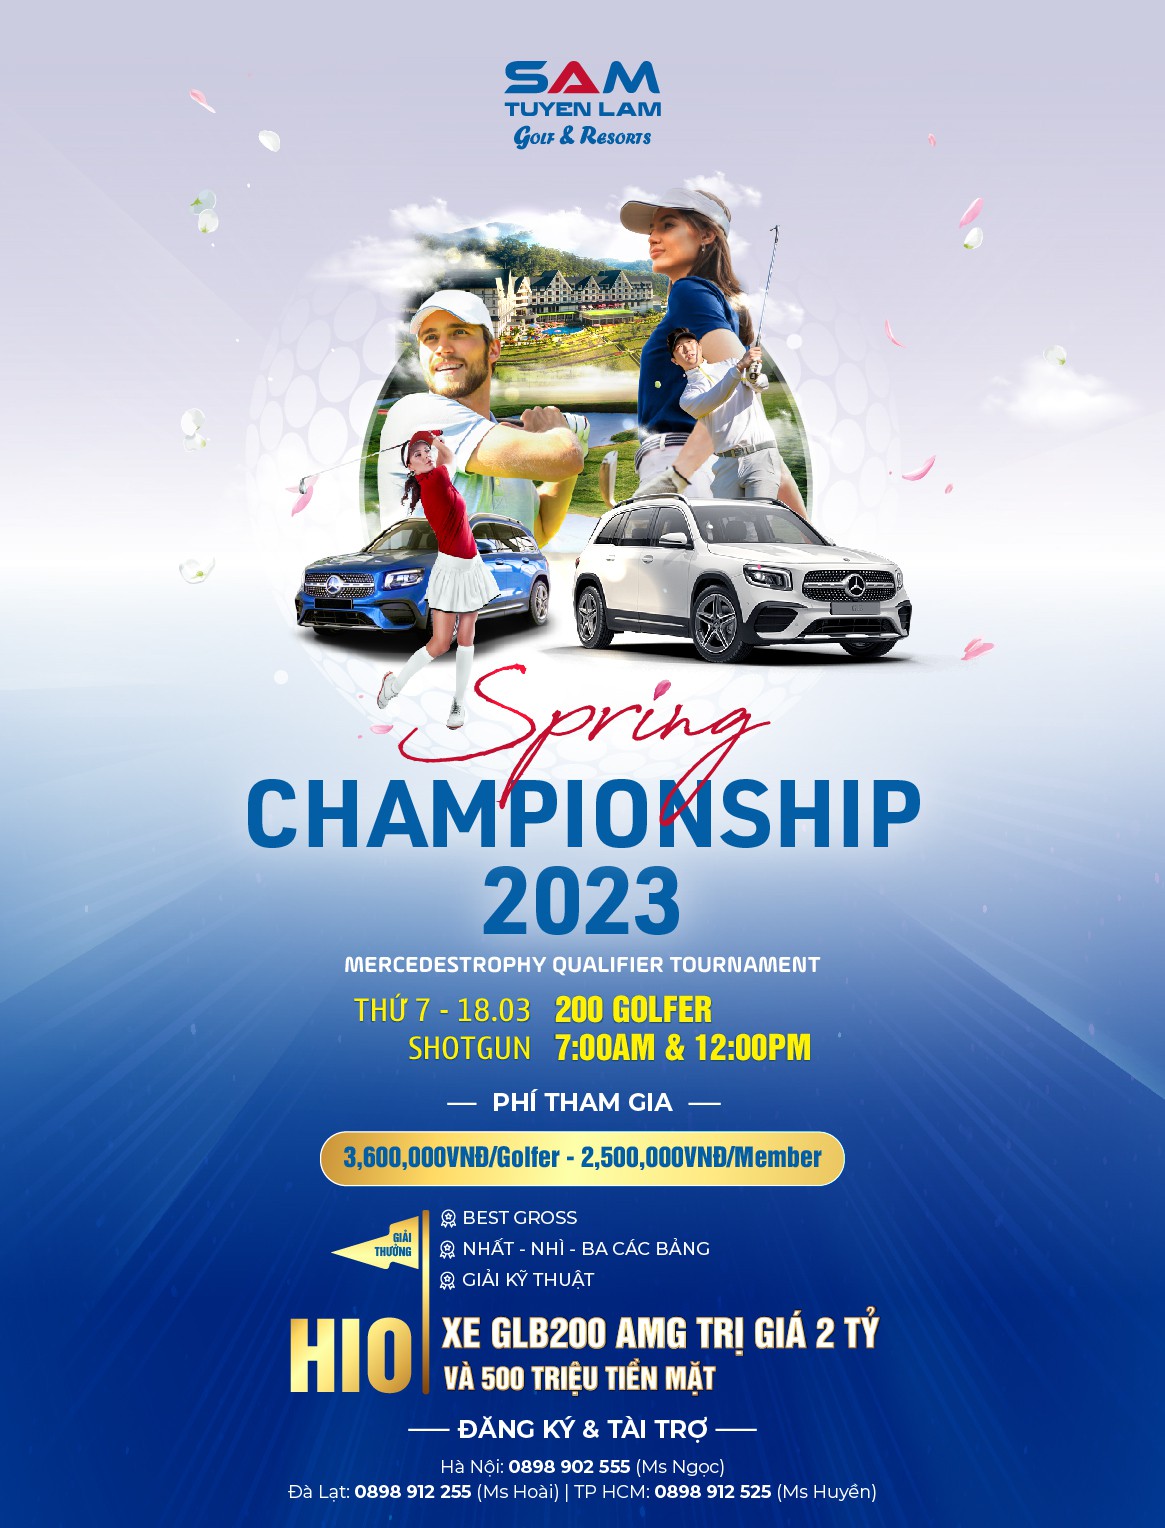 Sắp khởi tranh giải đấu Golf SAM Tuyen Lam Spring Championship 2023 - Mercedestrophy Qualifier Tournament